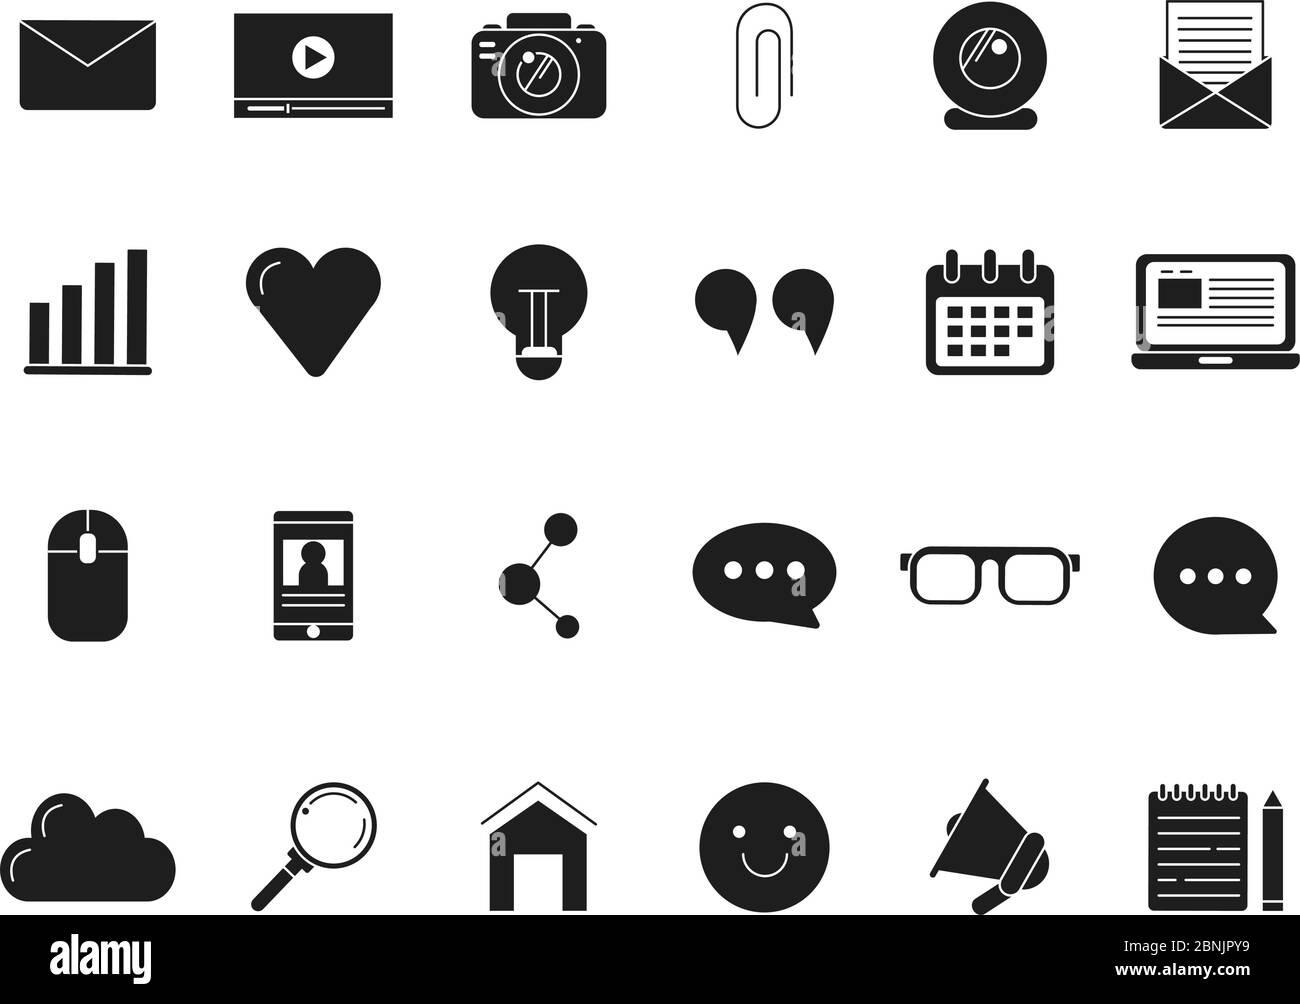 Blogging symbols. Web icon in black style. Vector monochrome pictures Stock Vector